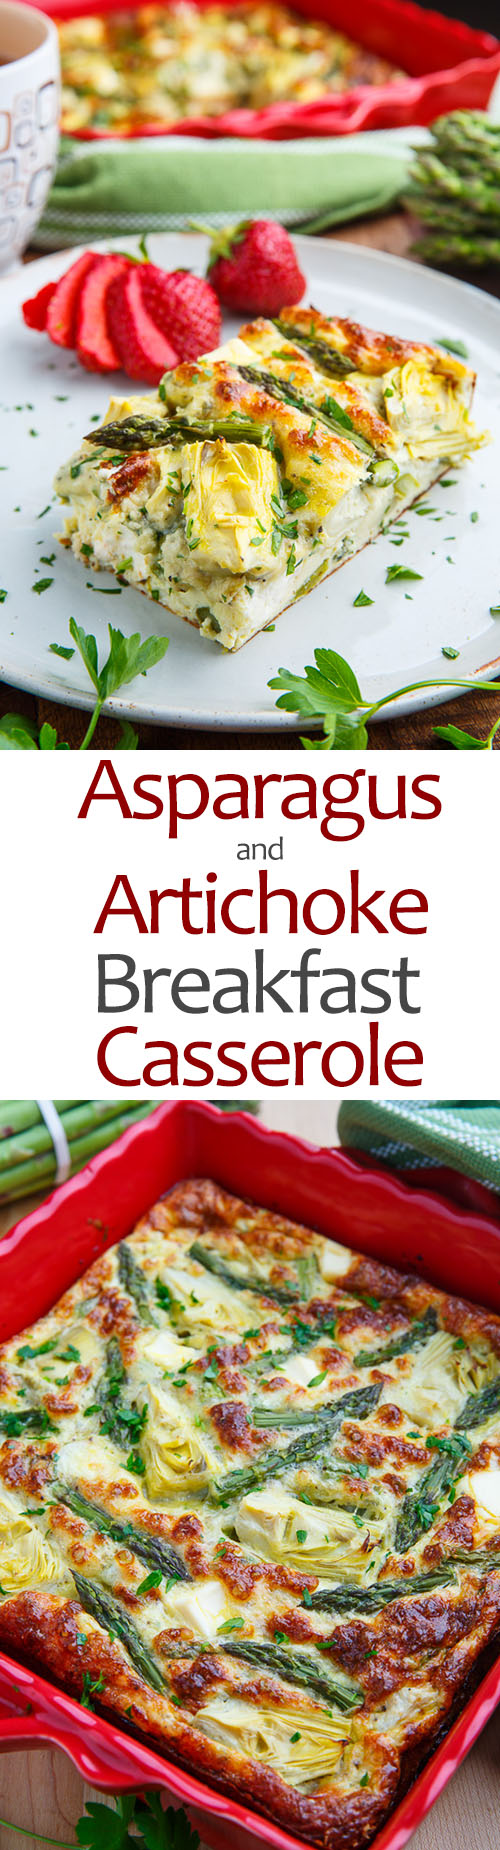 Asparagus and Artichoke Breakfast Casserole